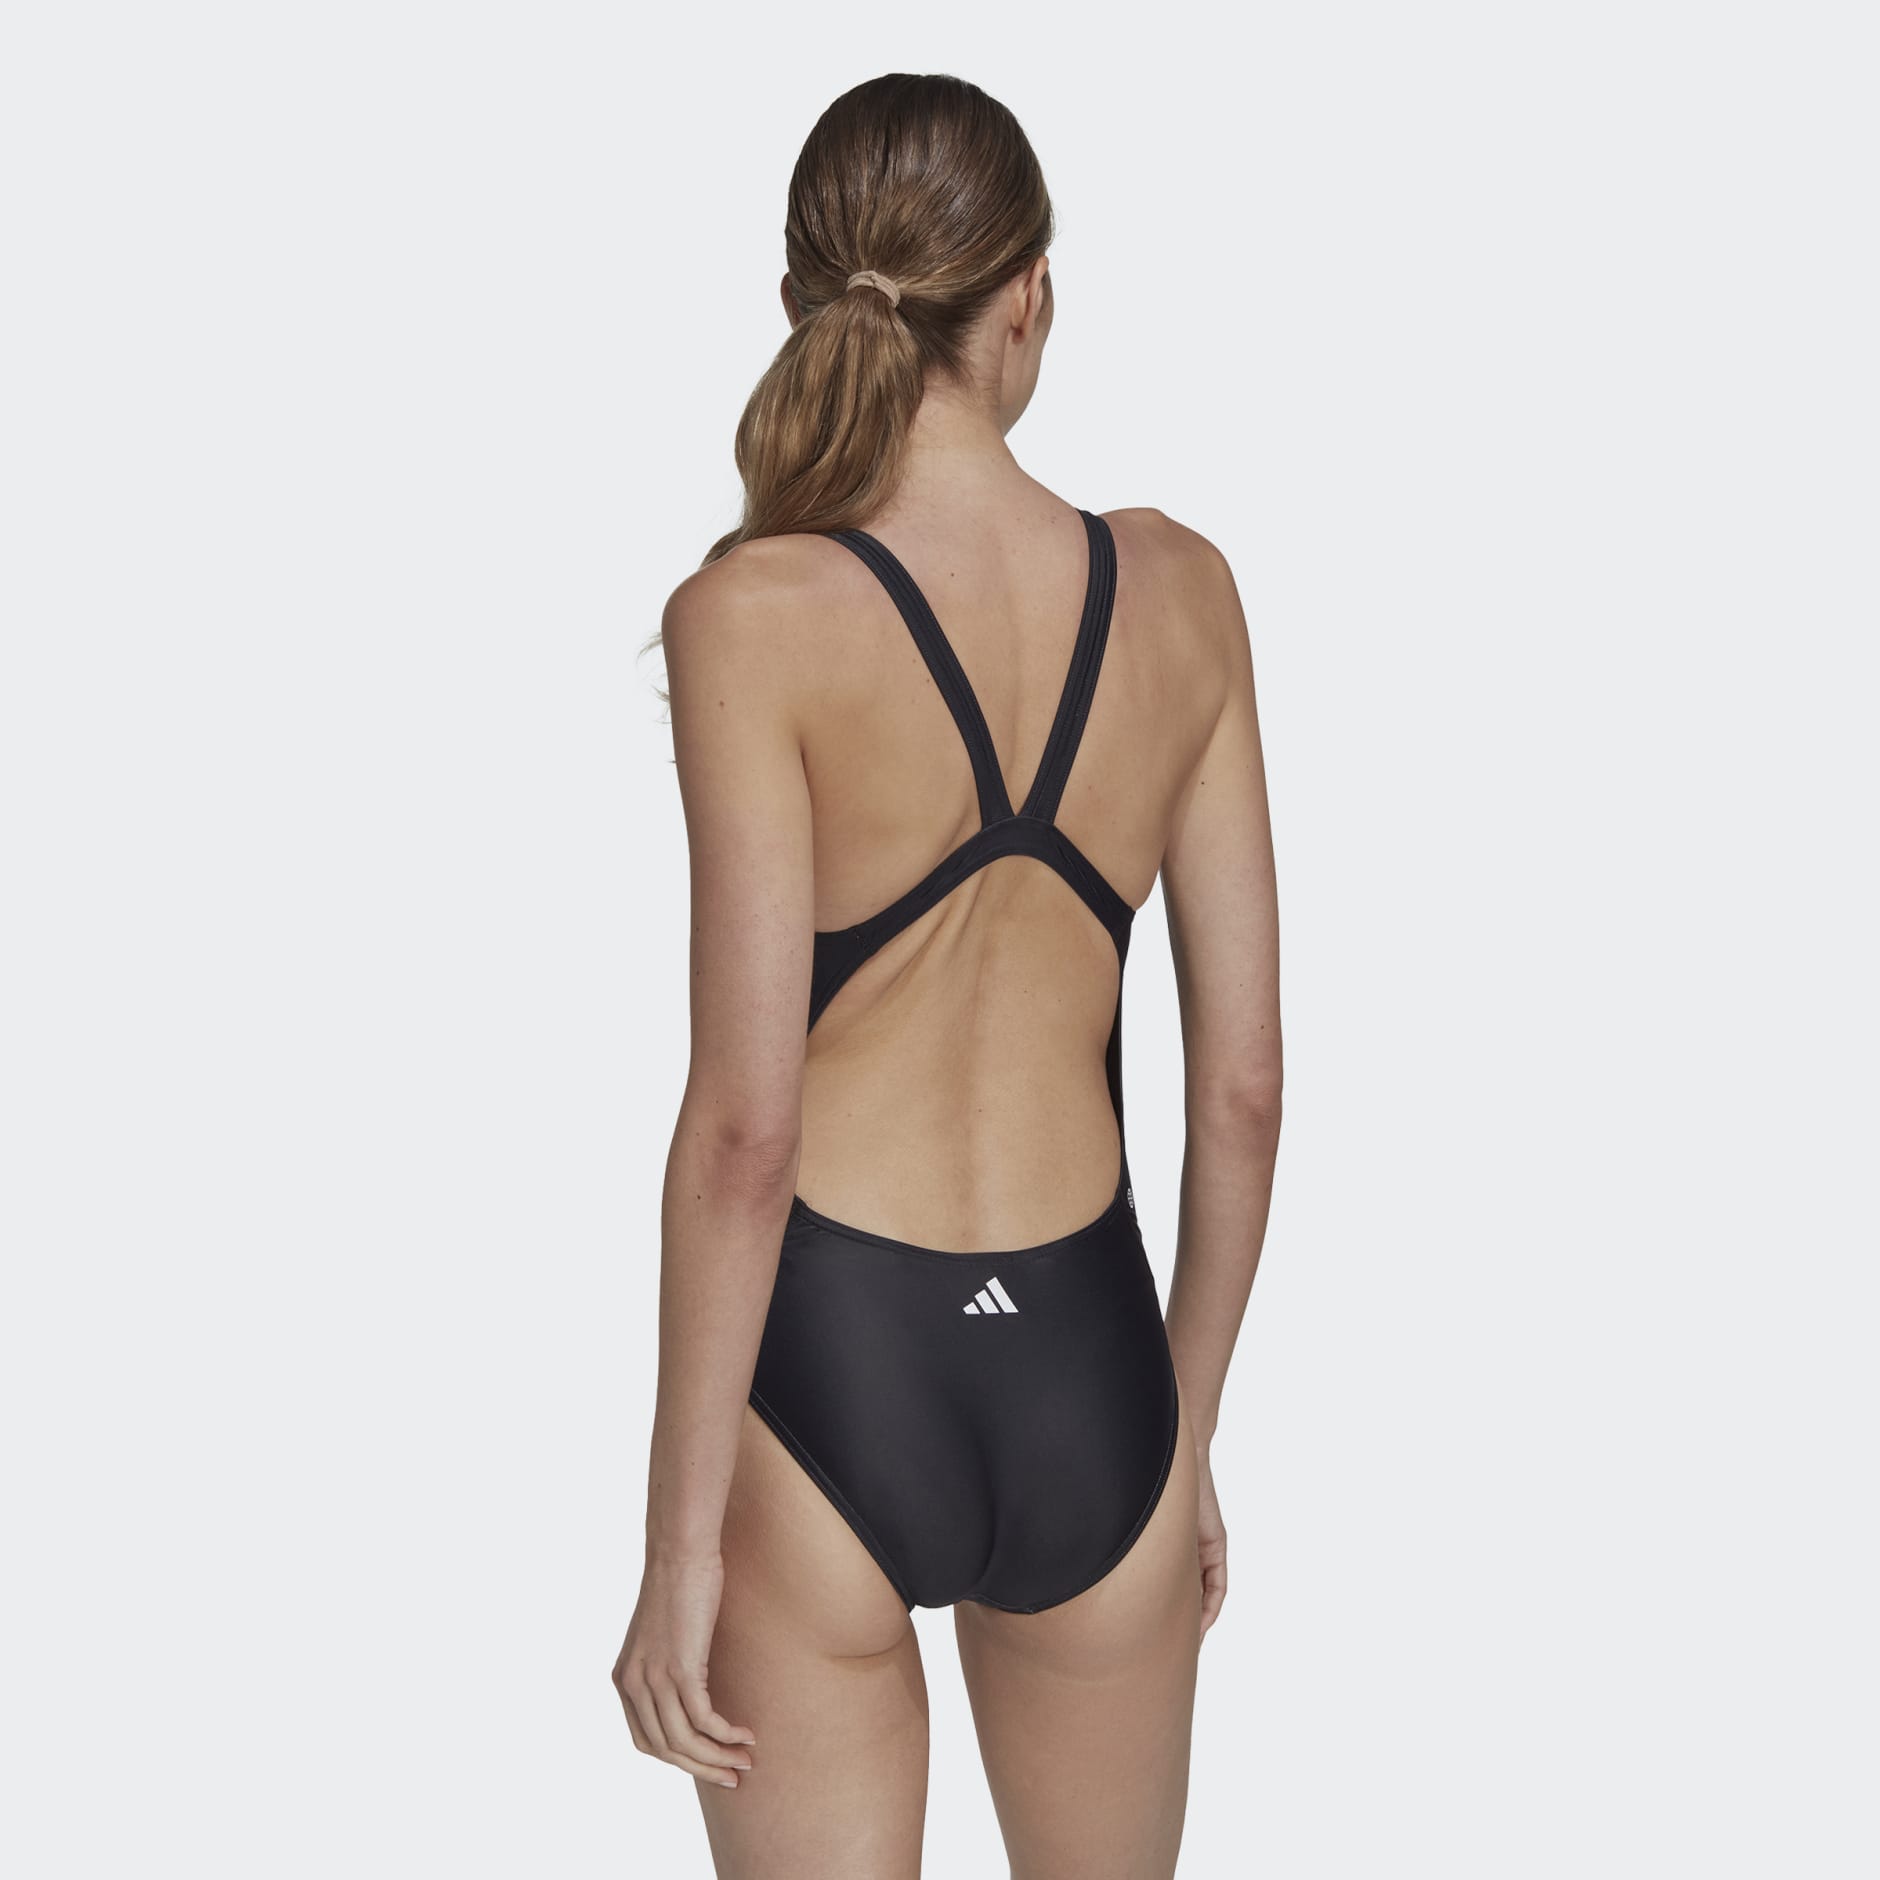 Women's Clothing - Big Bars Graphic Swimsuit - Black | adidas Oman